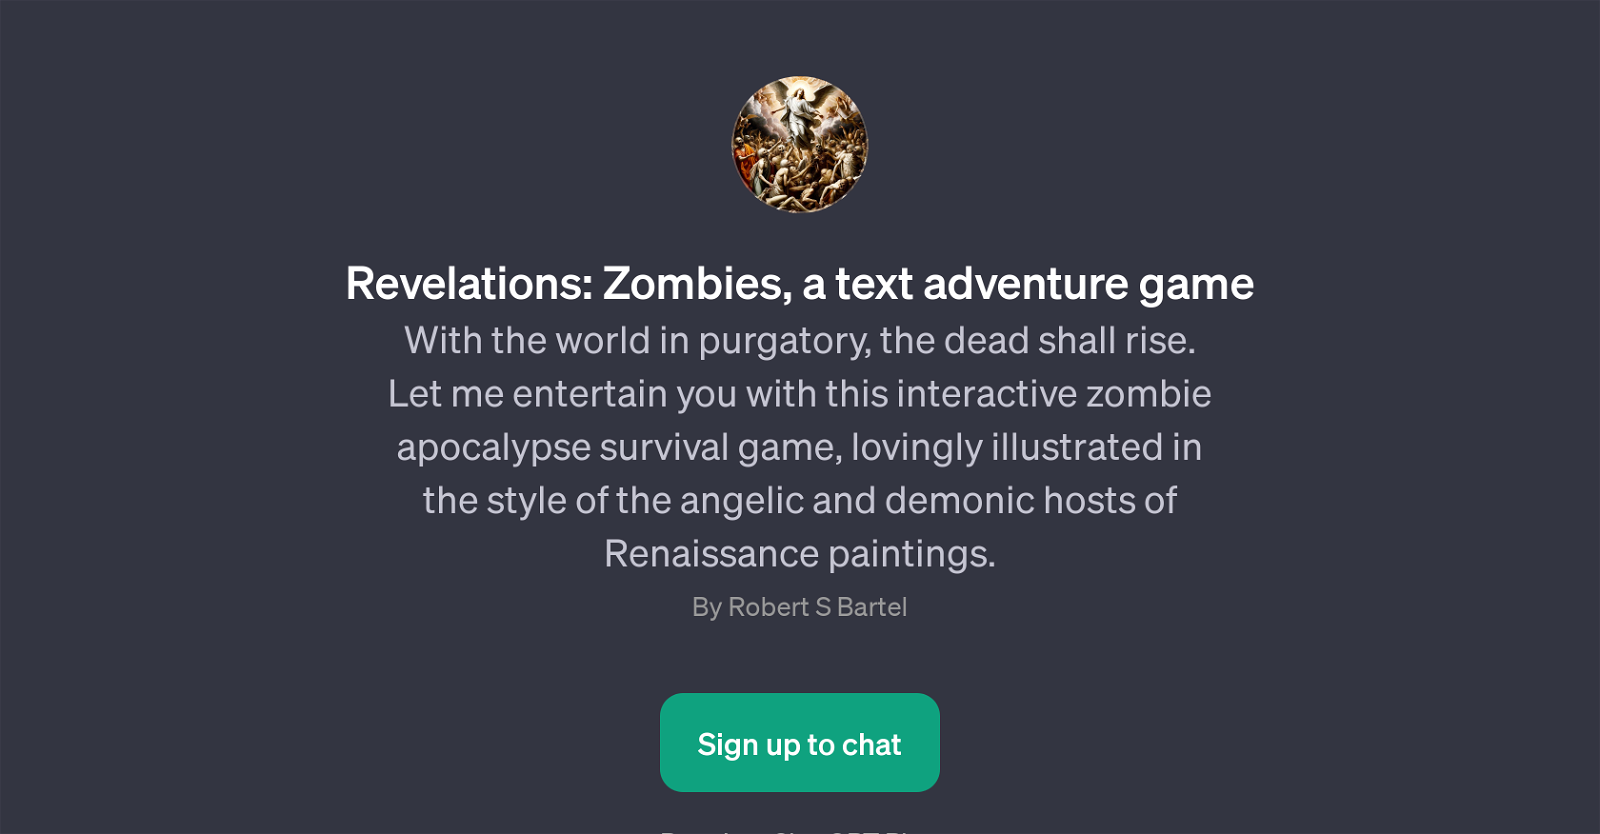 Revelations: Zombies website